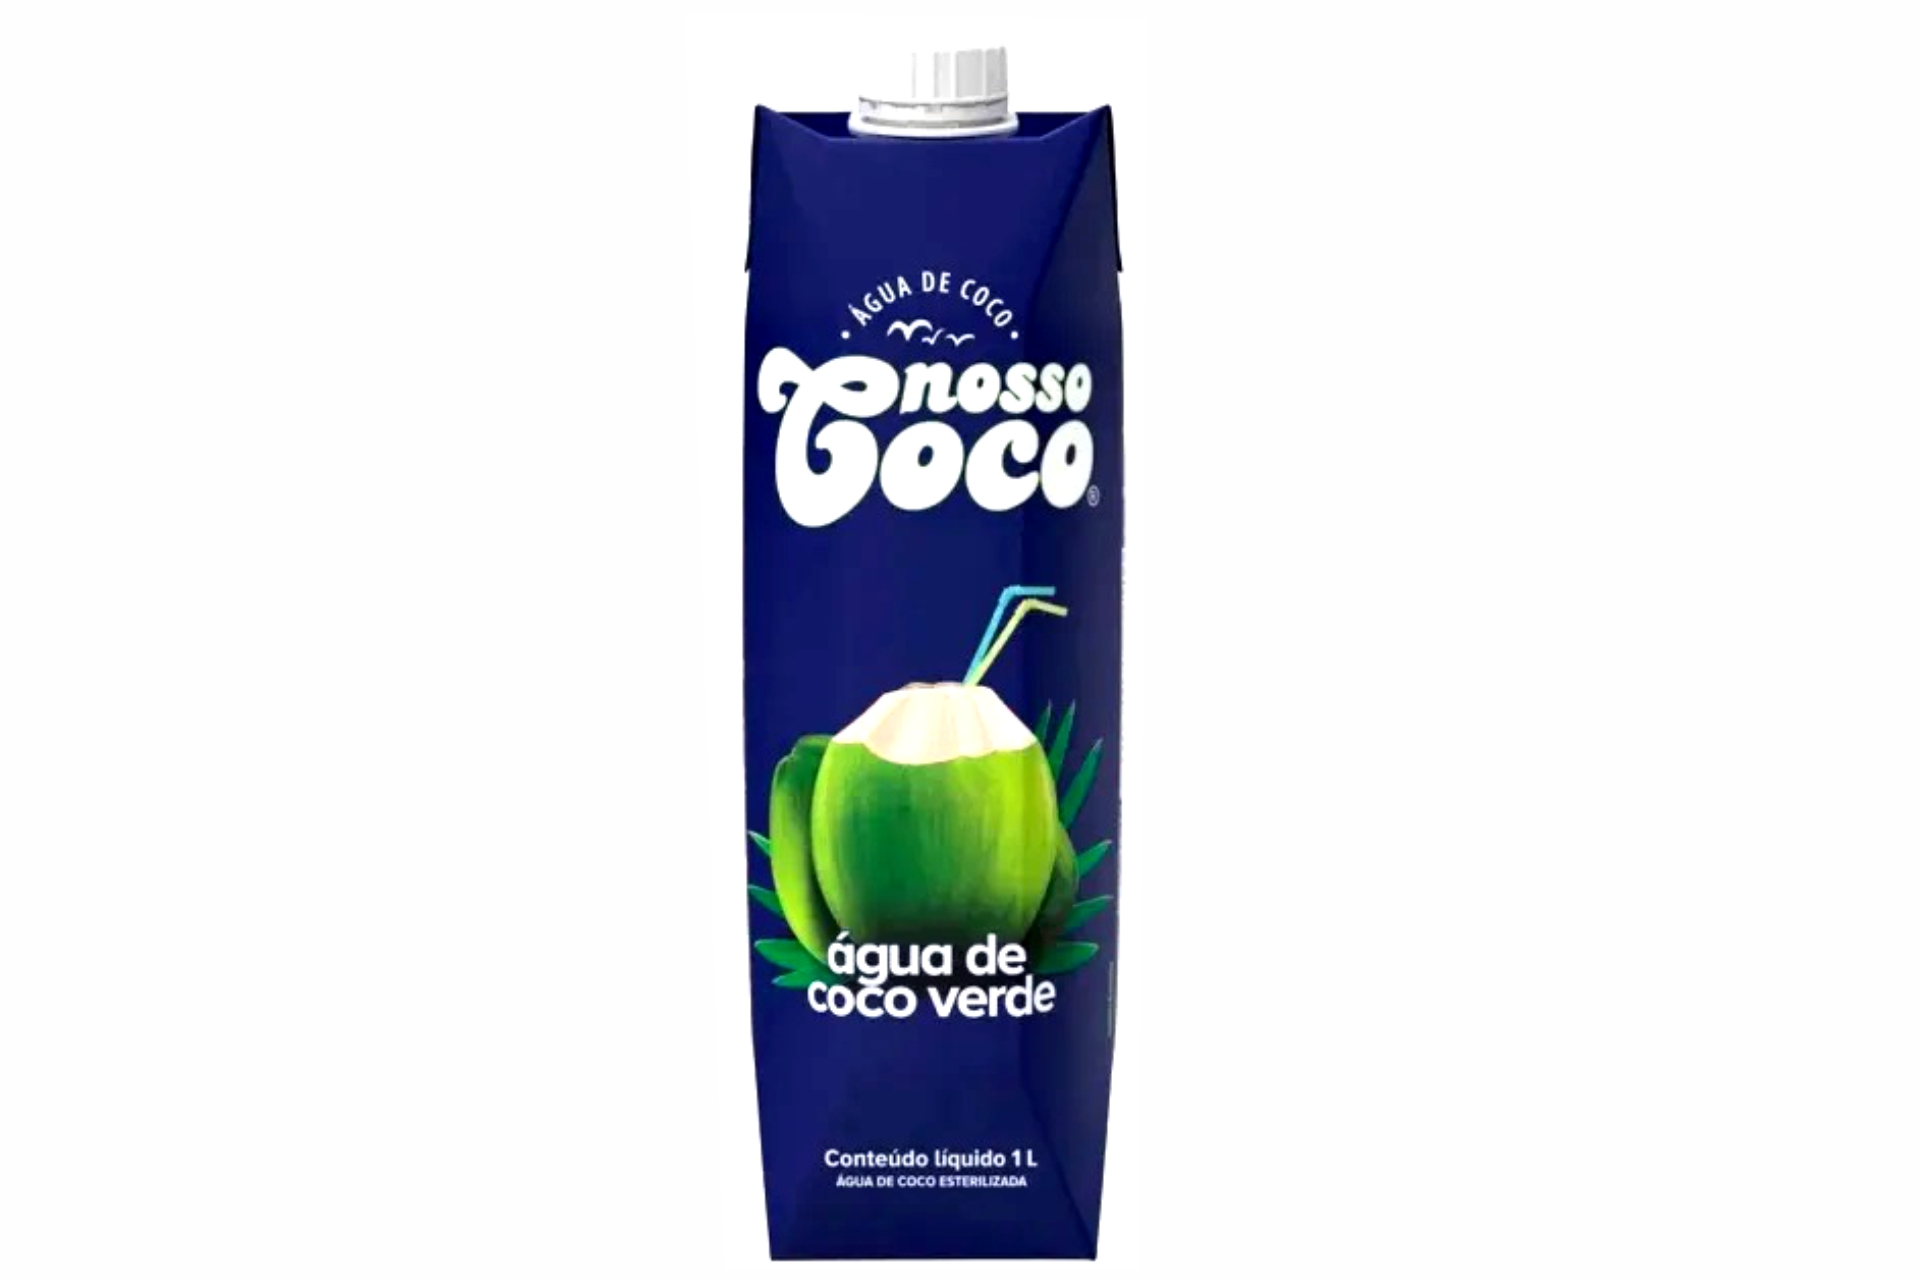 Água de Coco Coko 200ml - Nossa Distribuidora